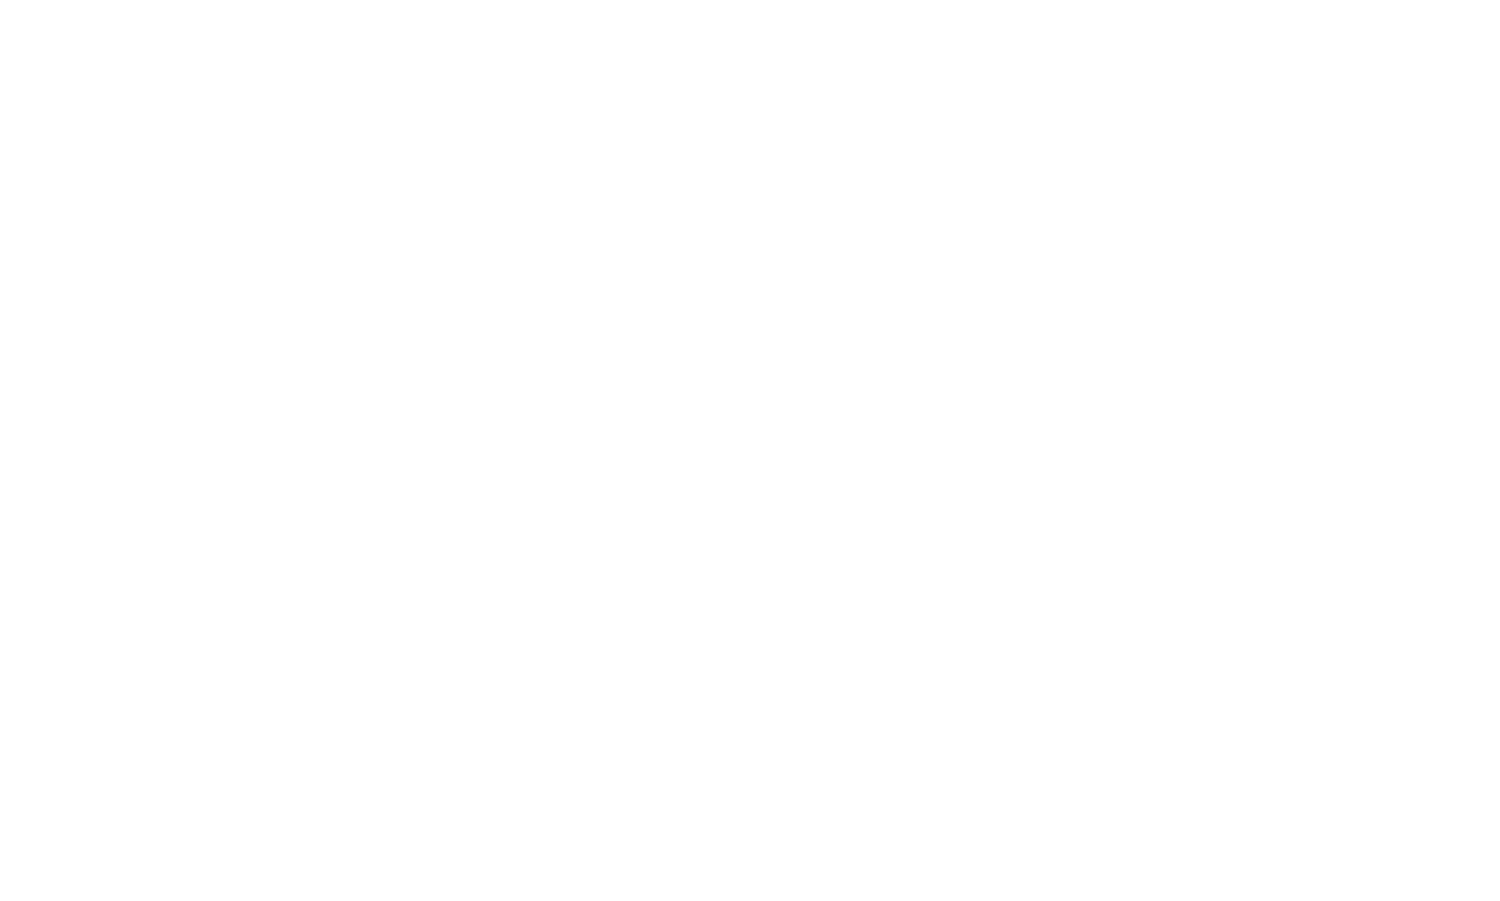 The Pat